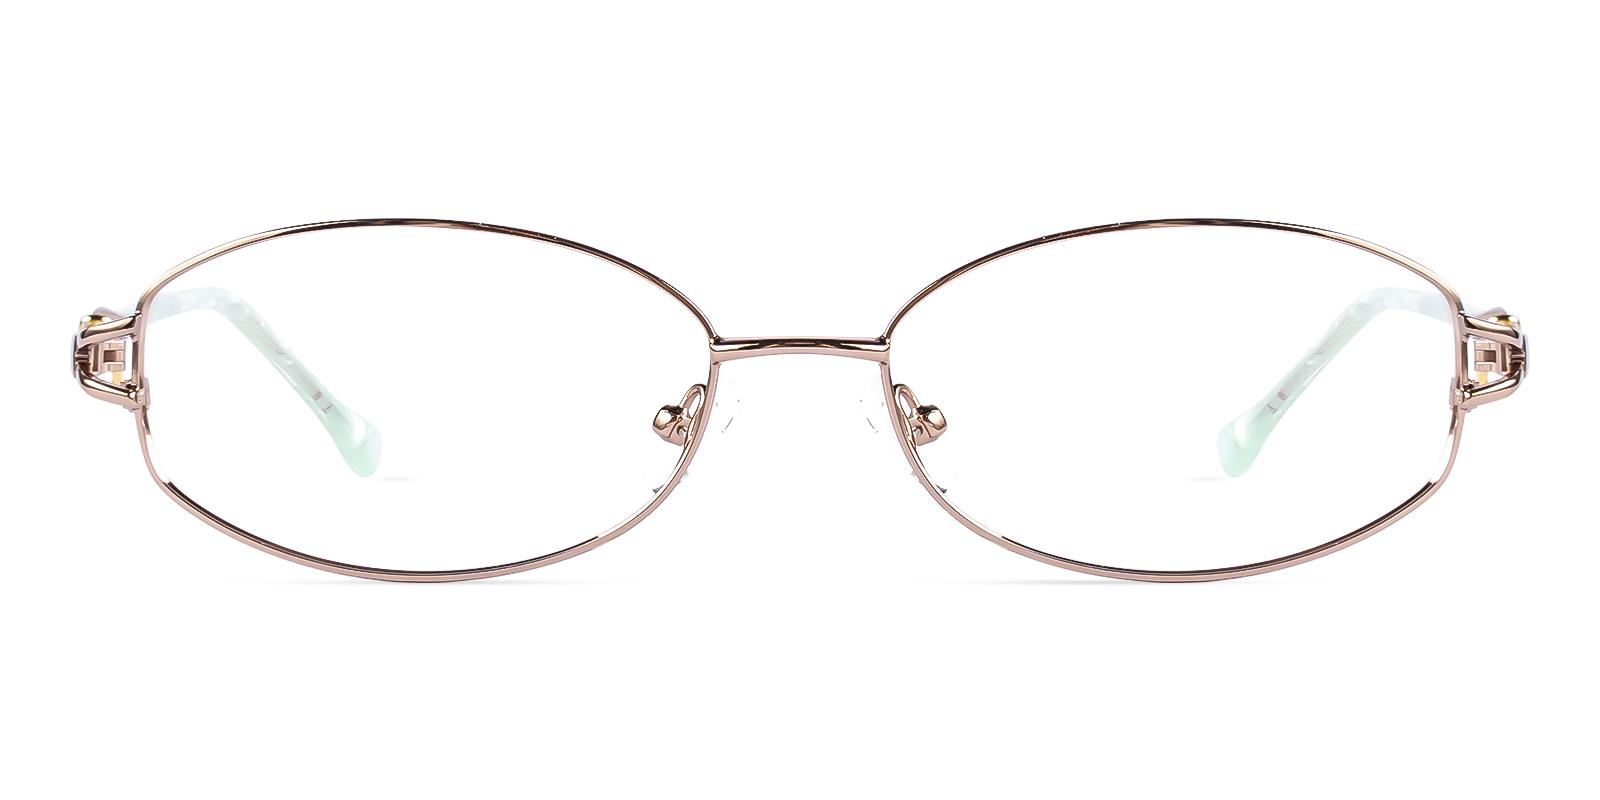 Glplious Rosegold Metal Eyeglasses , NosePads Frames from ABBE Glasses